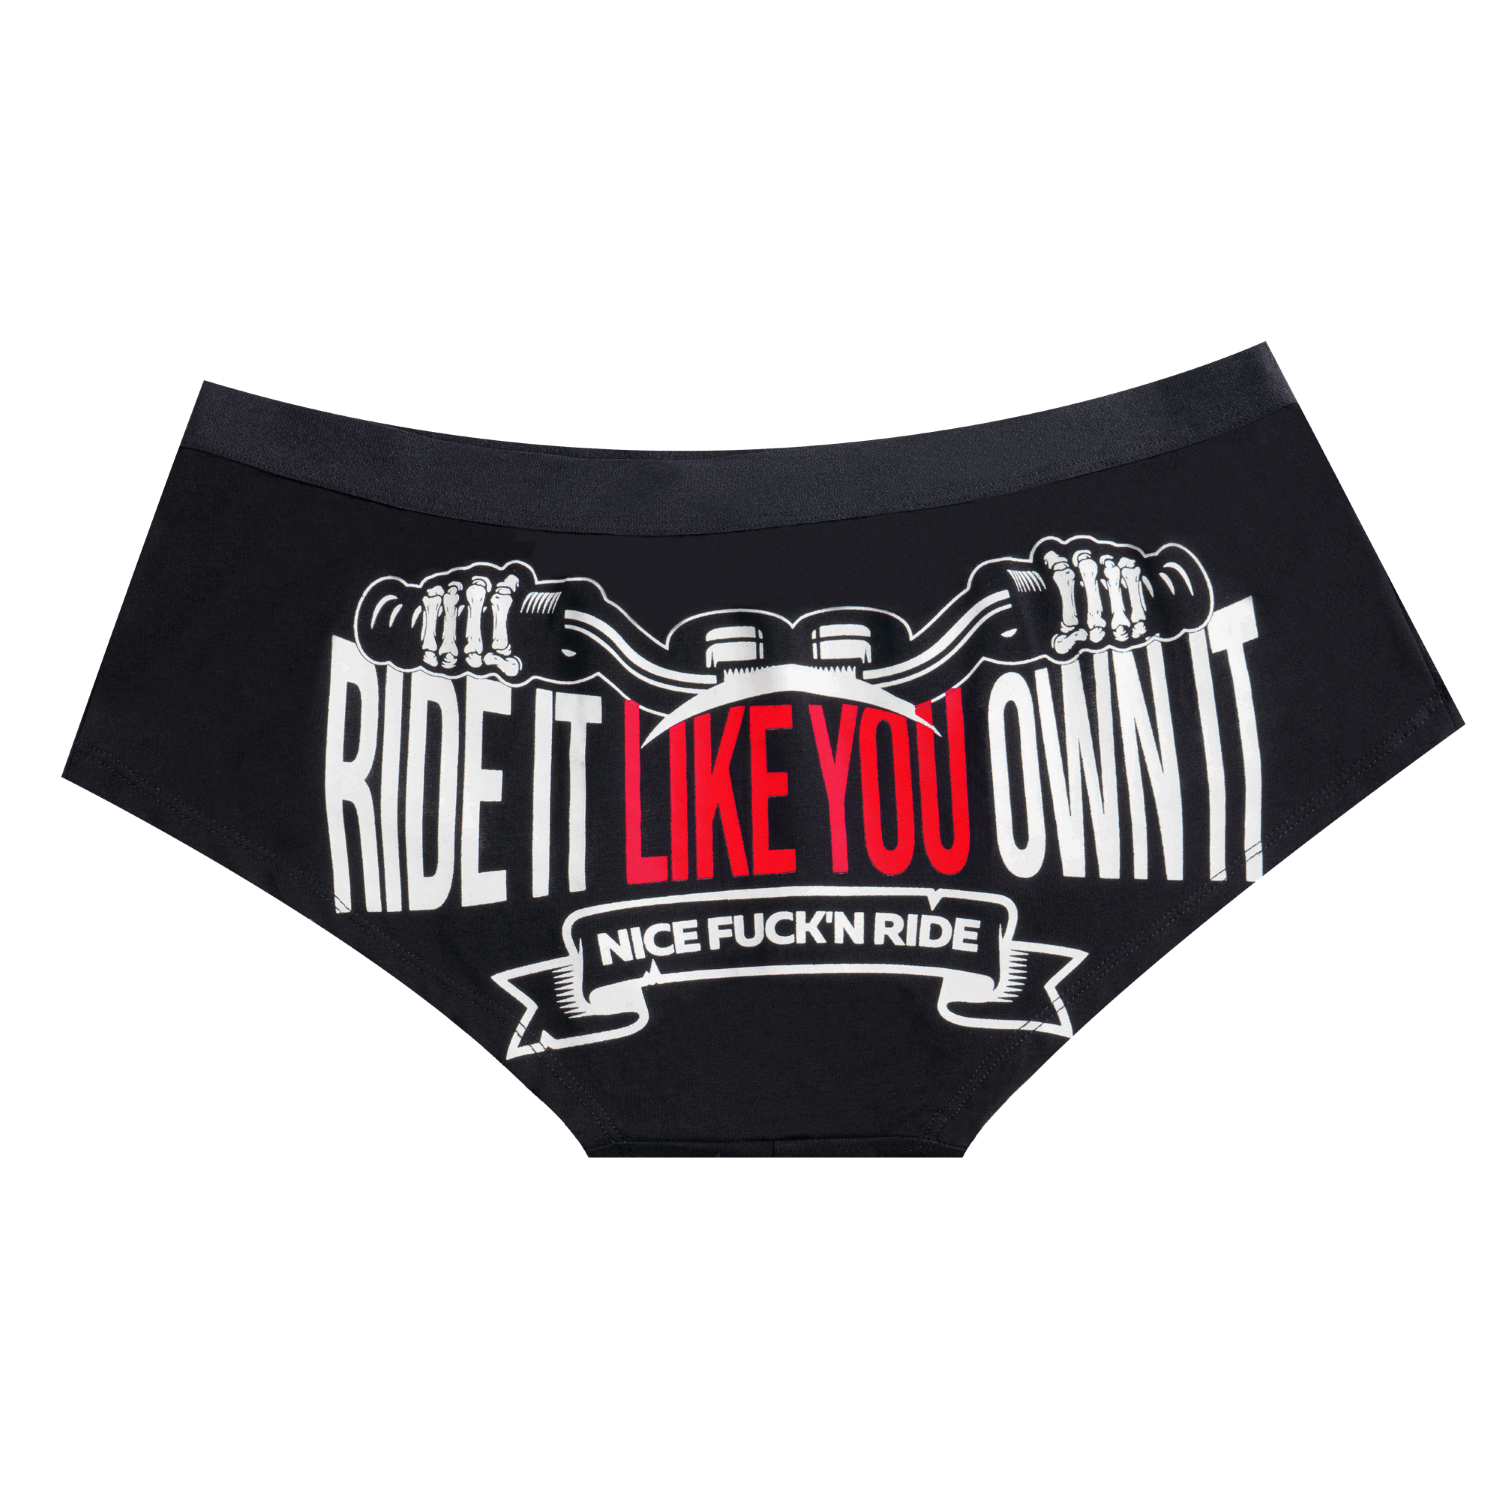 Briefs - Men's - Underwear - Ride It Like You Own It - Biker Undies - BSHT57-DL